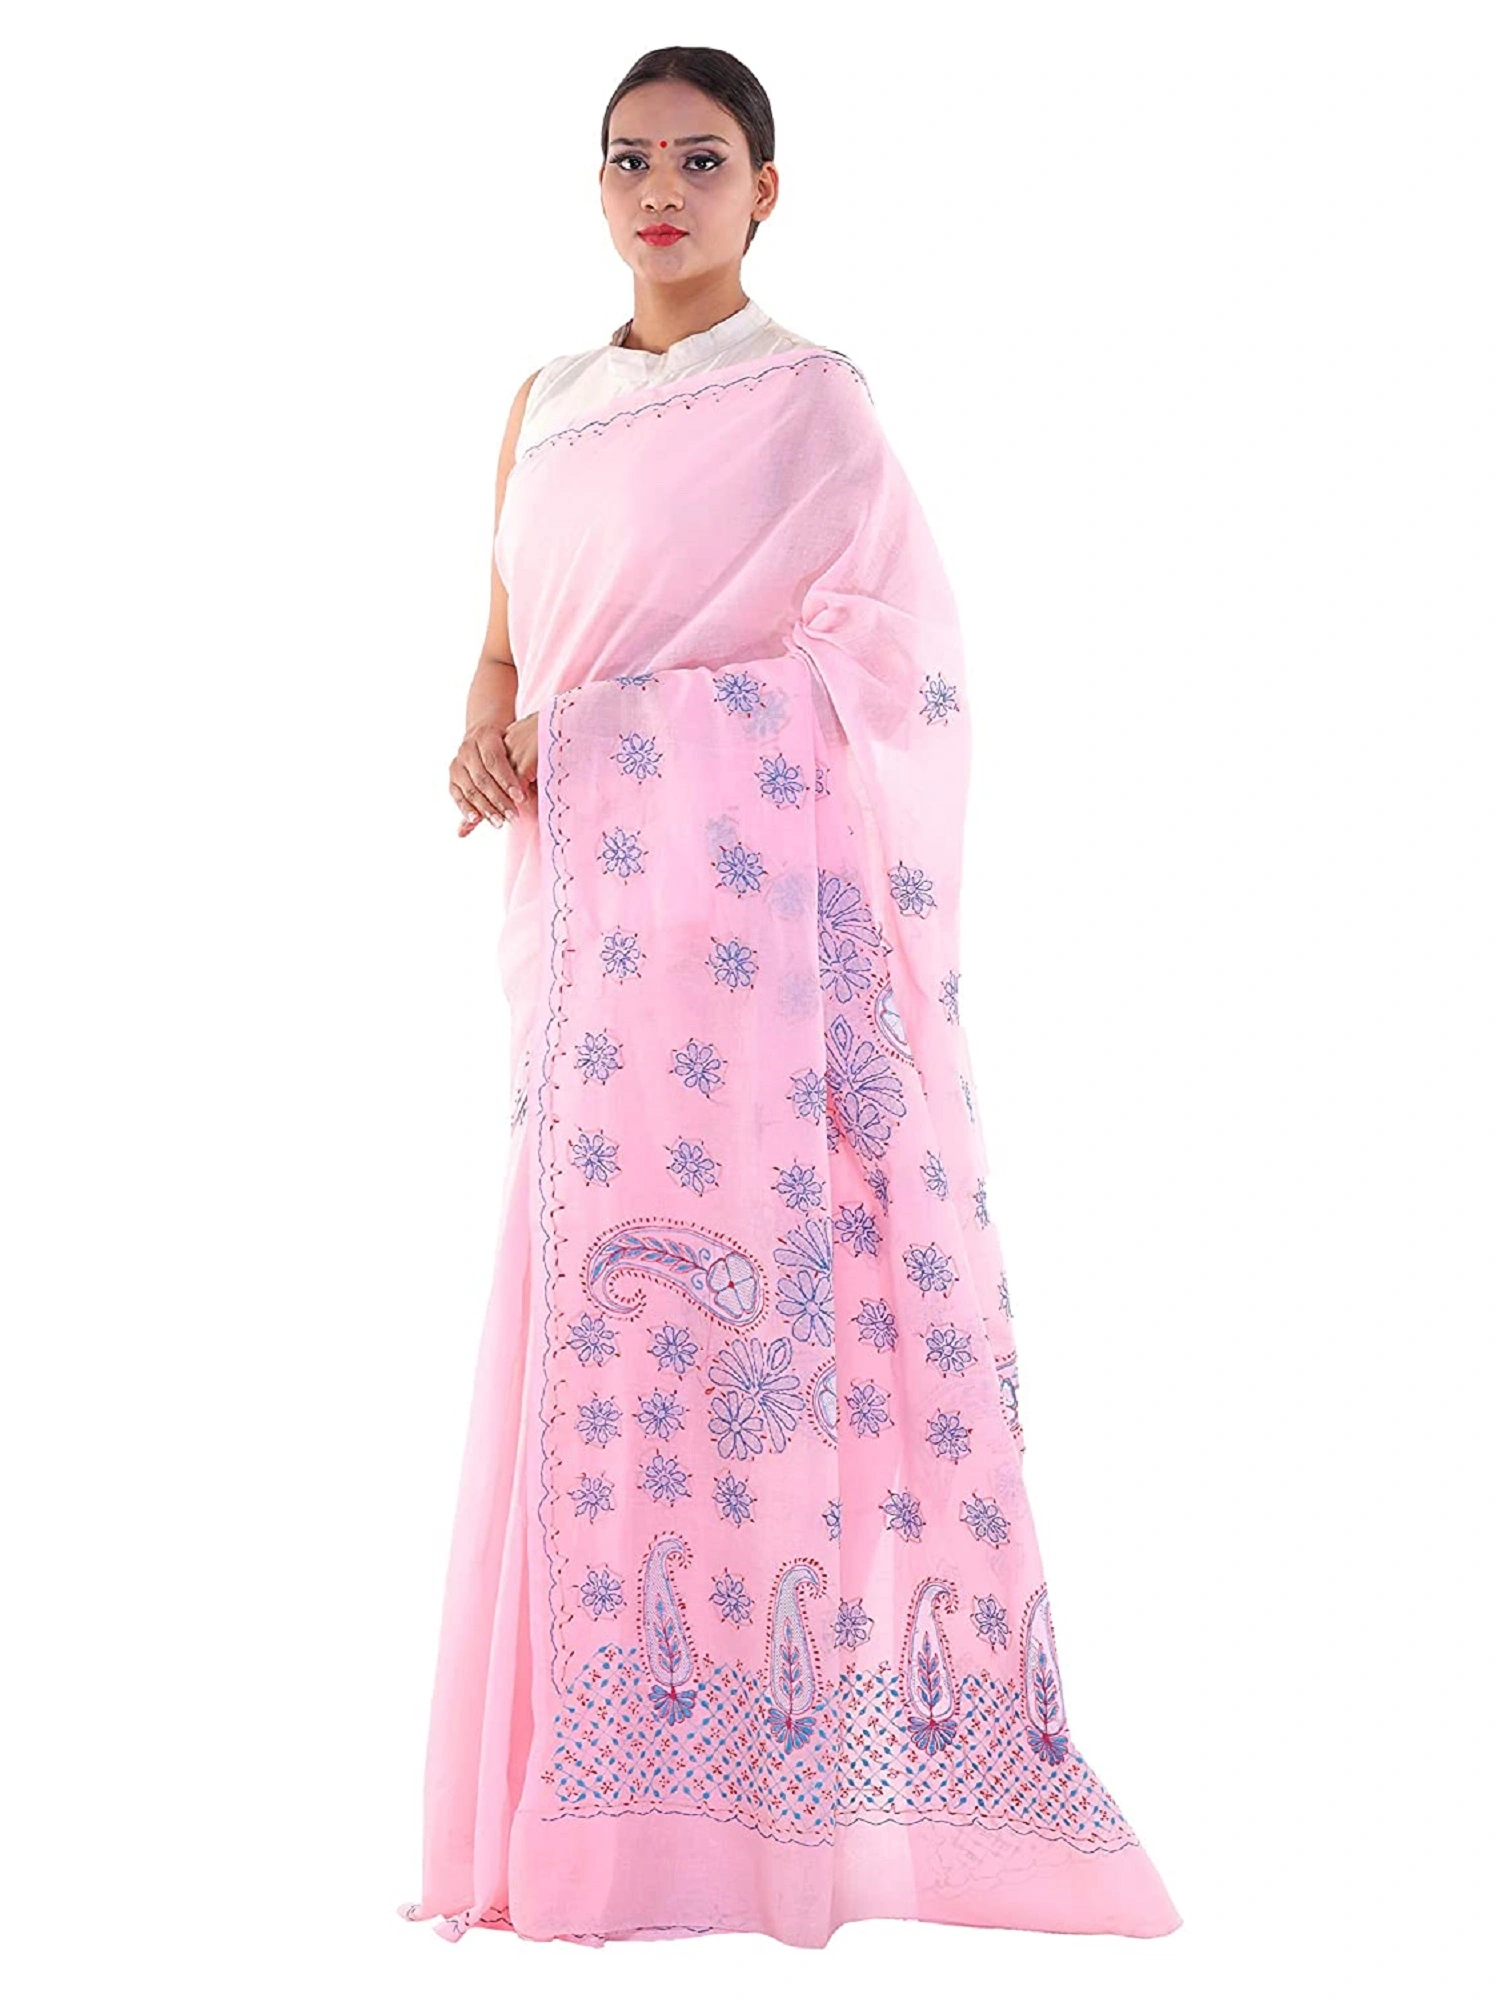 Lavangi Lucknow Chikan Baby Pink Cotton Net Saree